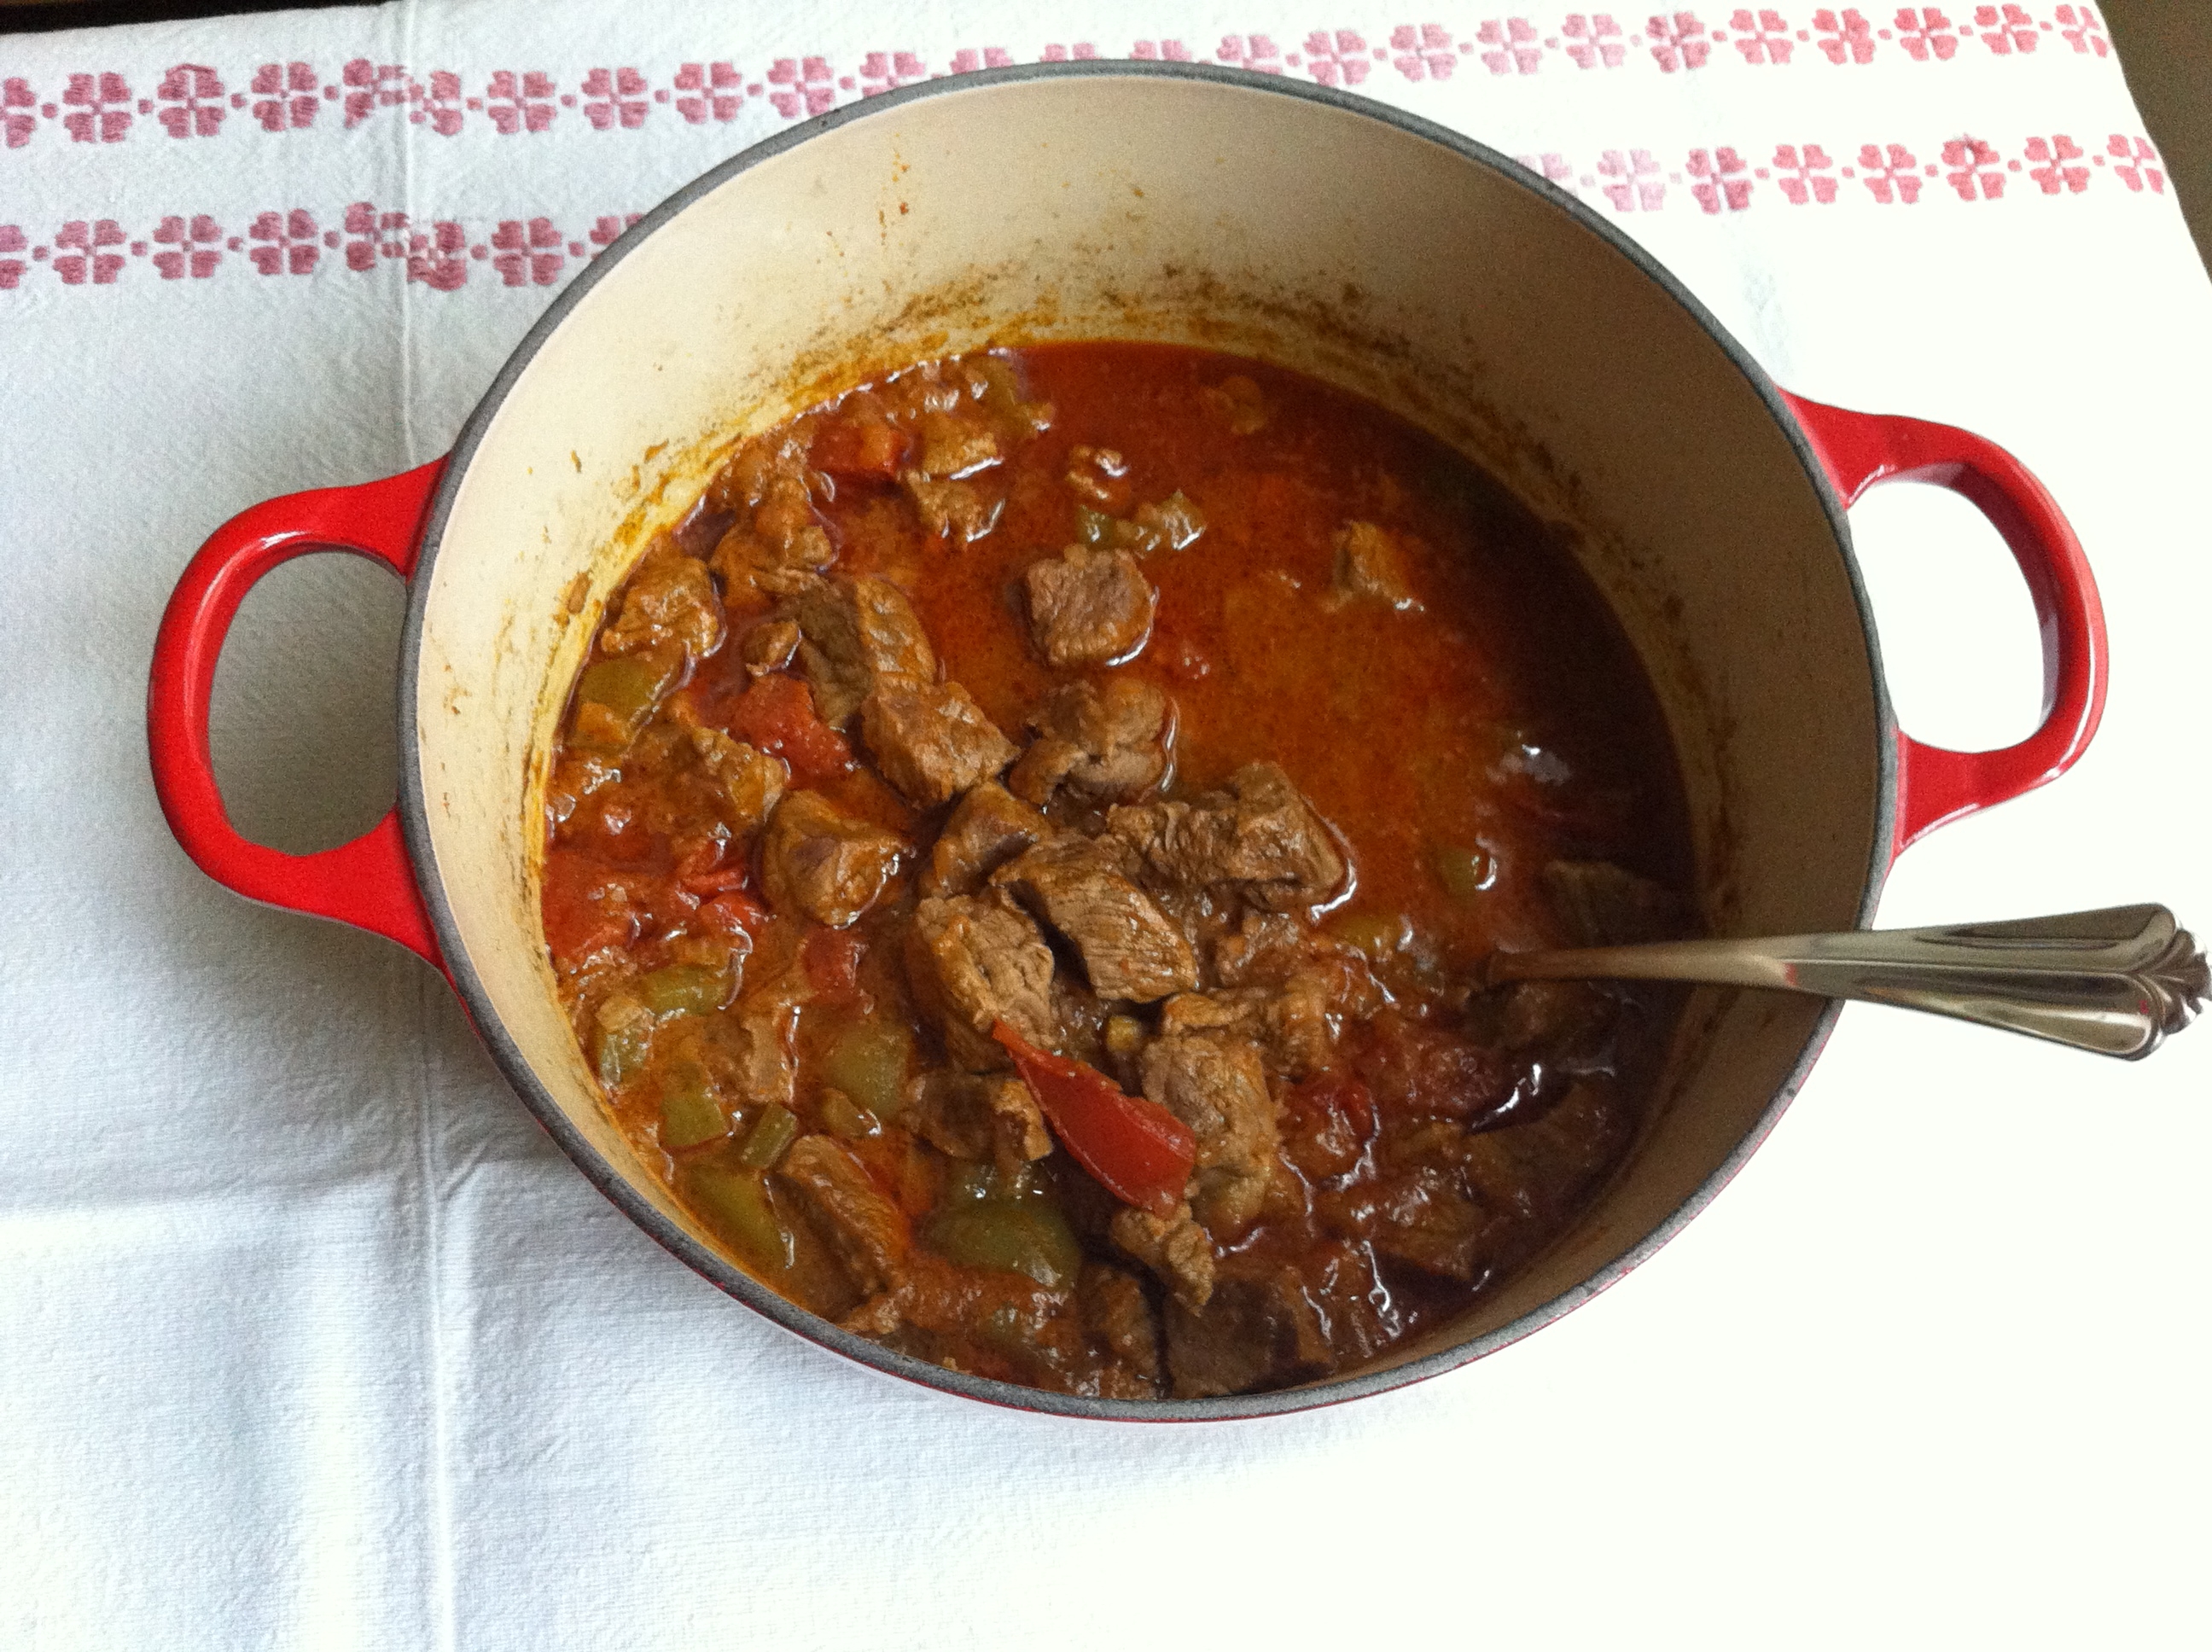 Image result for Pörkölt (meat stew) food in hungary